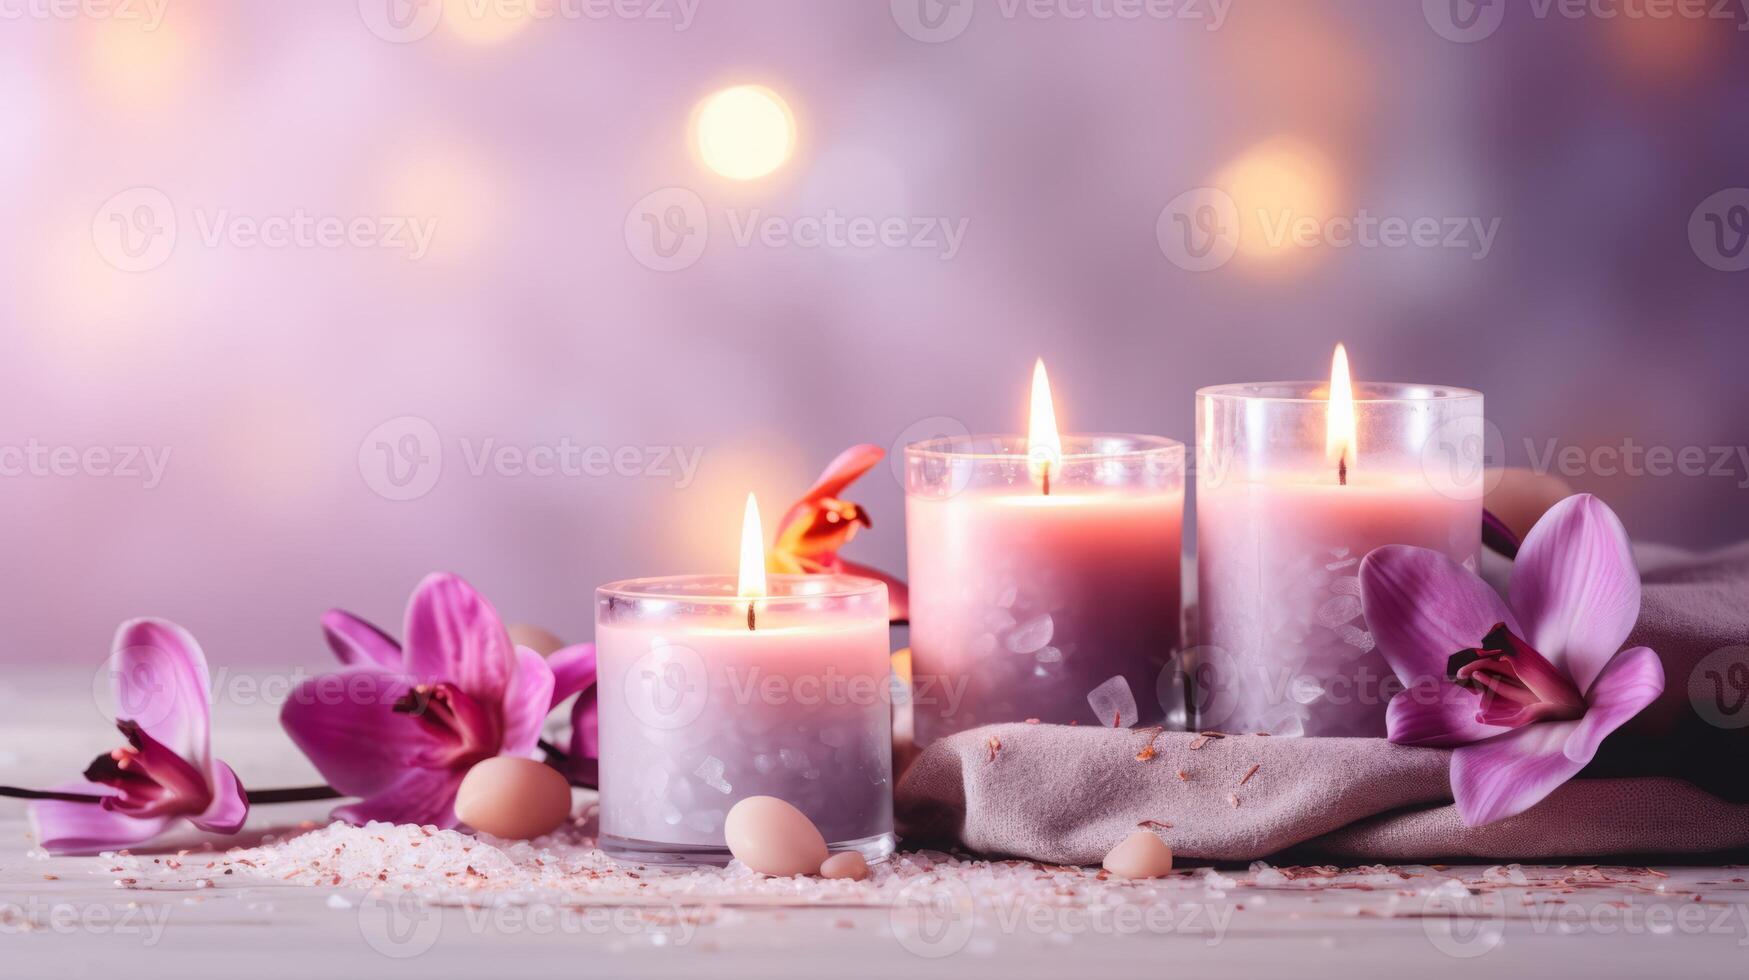 ai gegenereerd ontspannende spa sfeer met kaarsen en bloemen foto